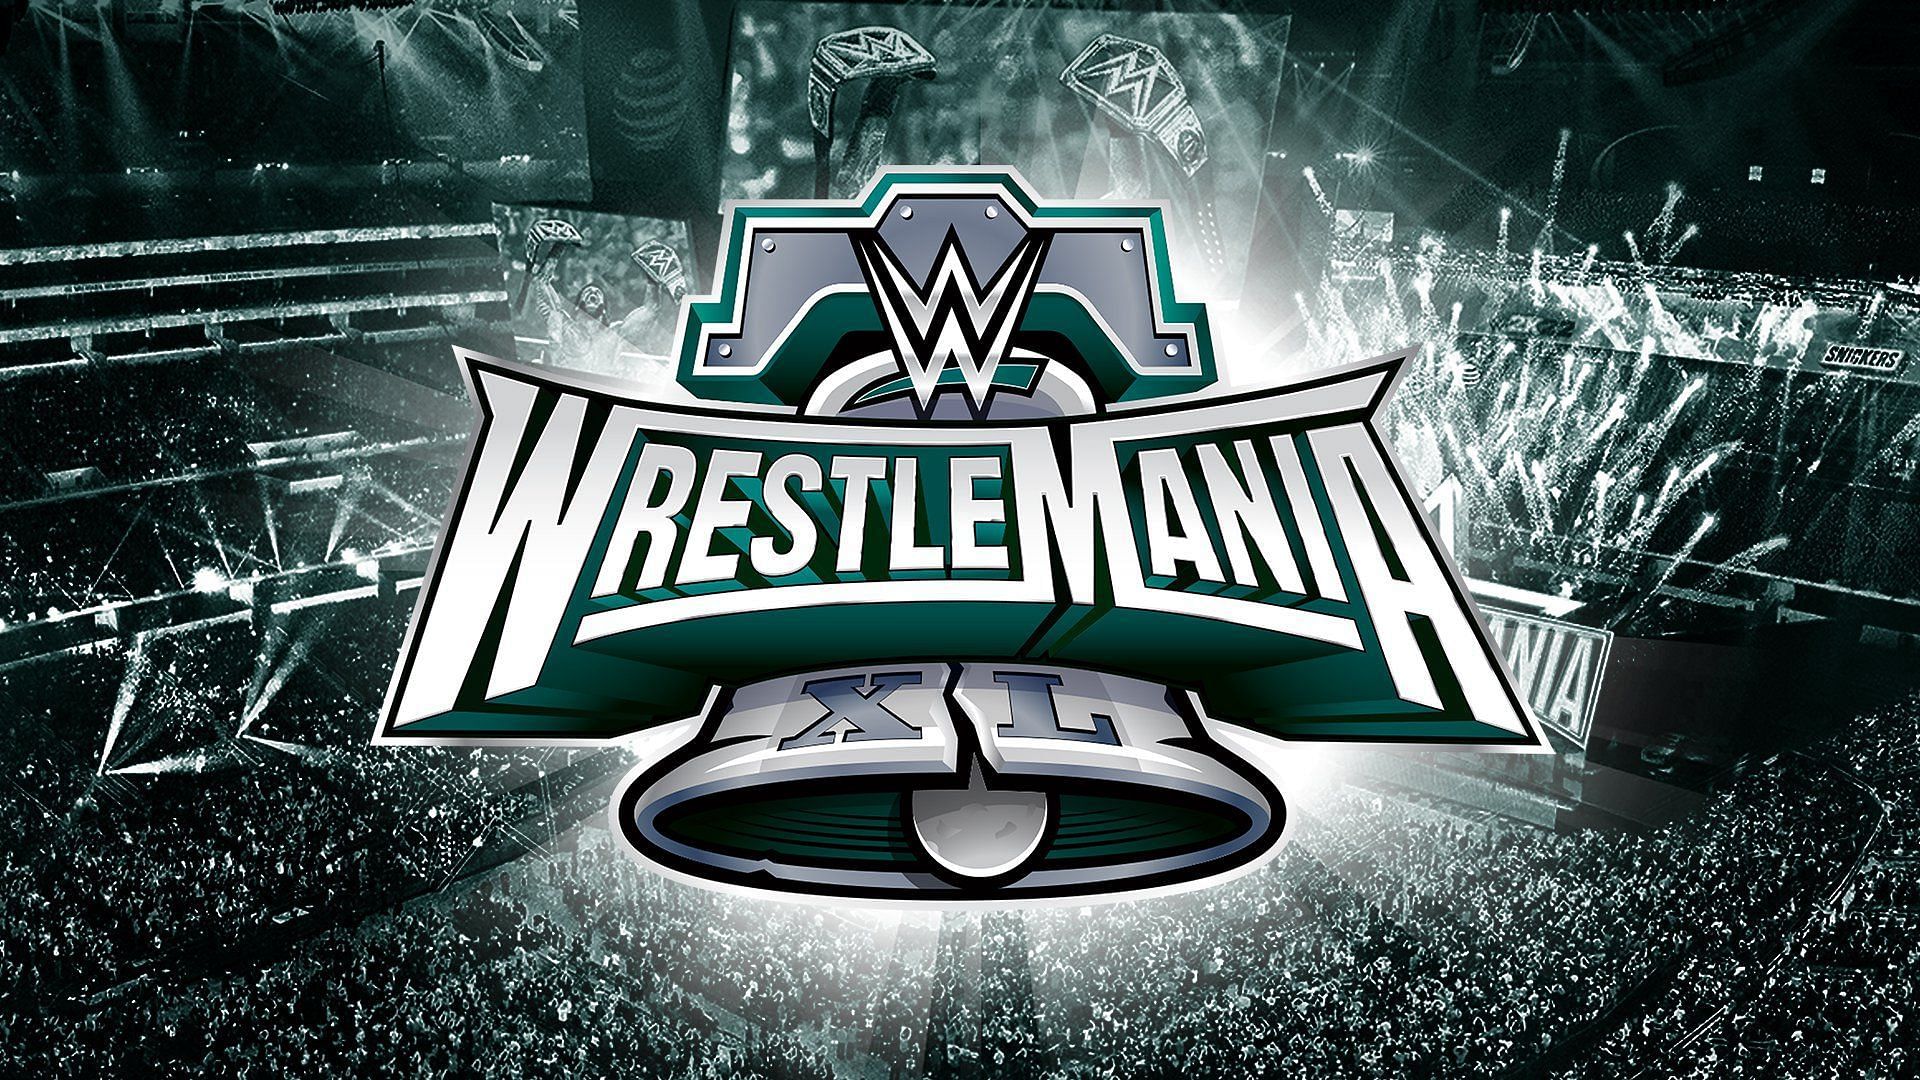 The official WWE WrestleMania XL logo